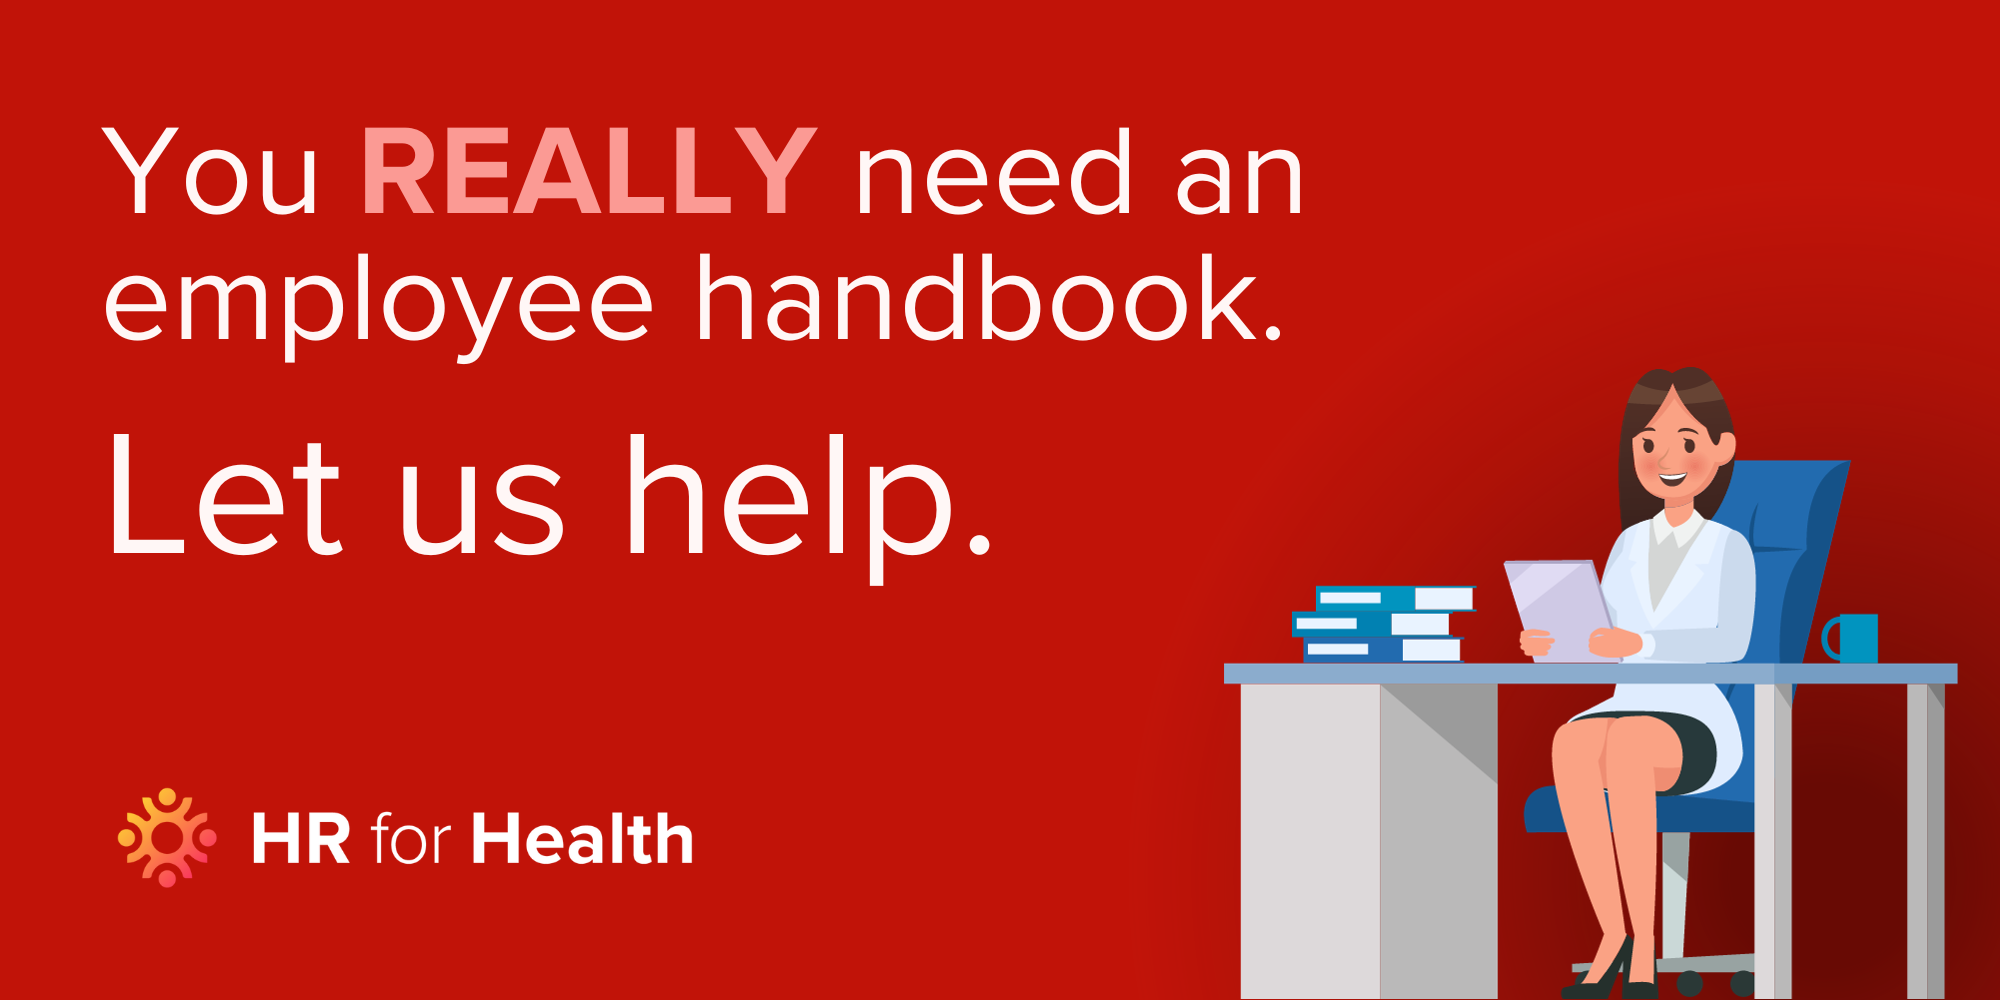 You REALLY need an employee handbook.